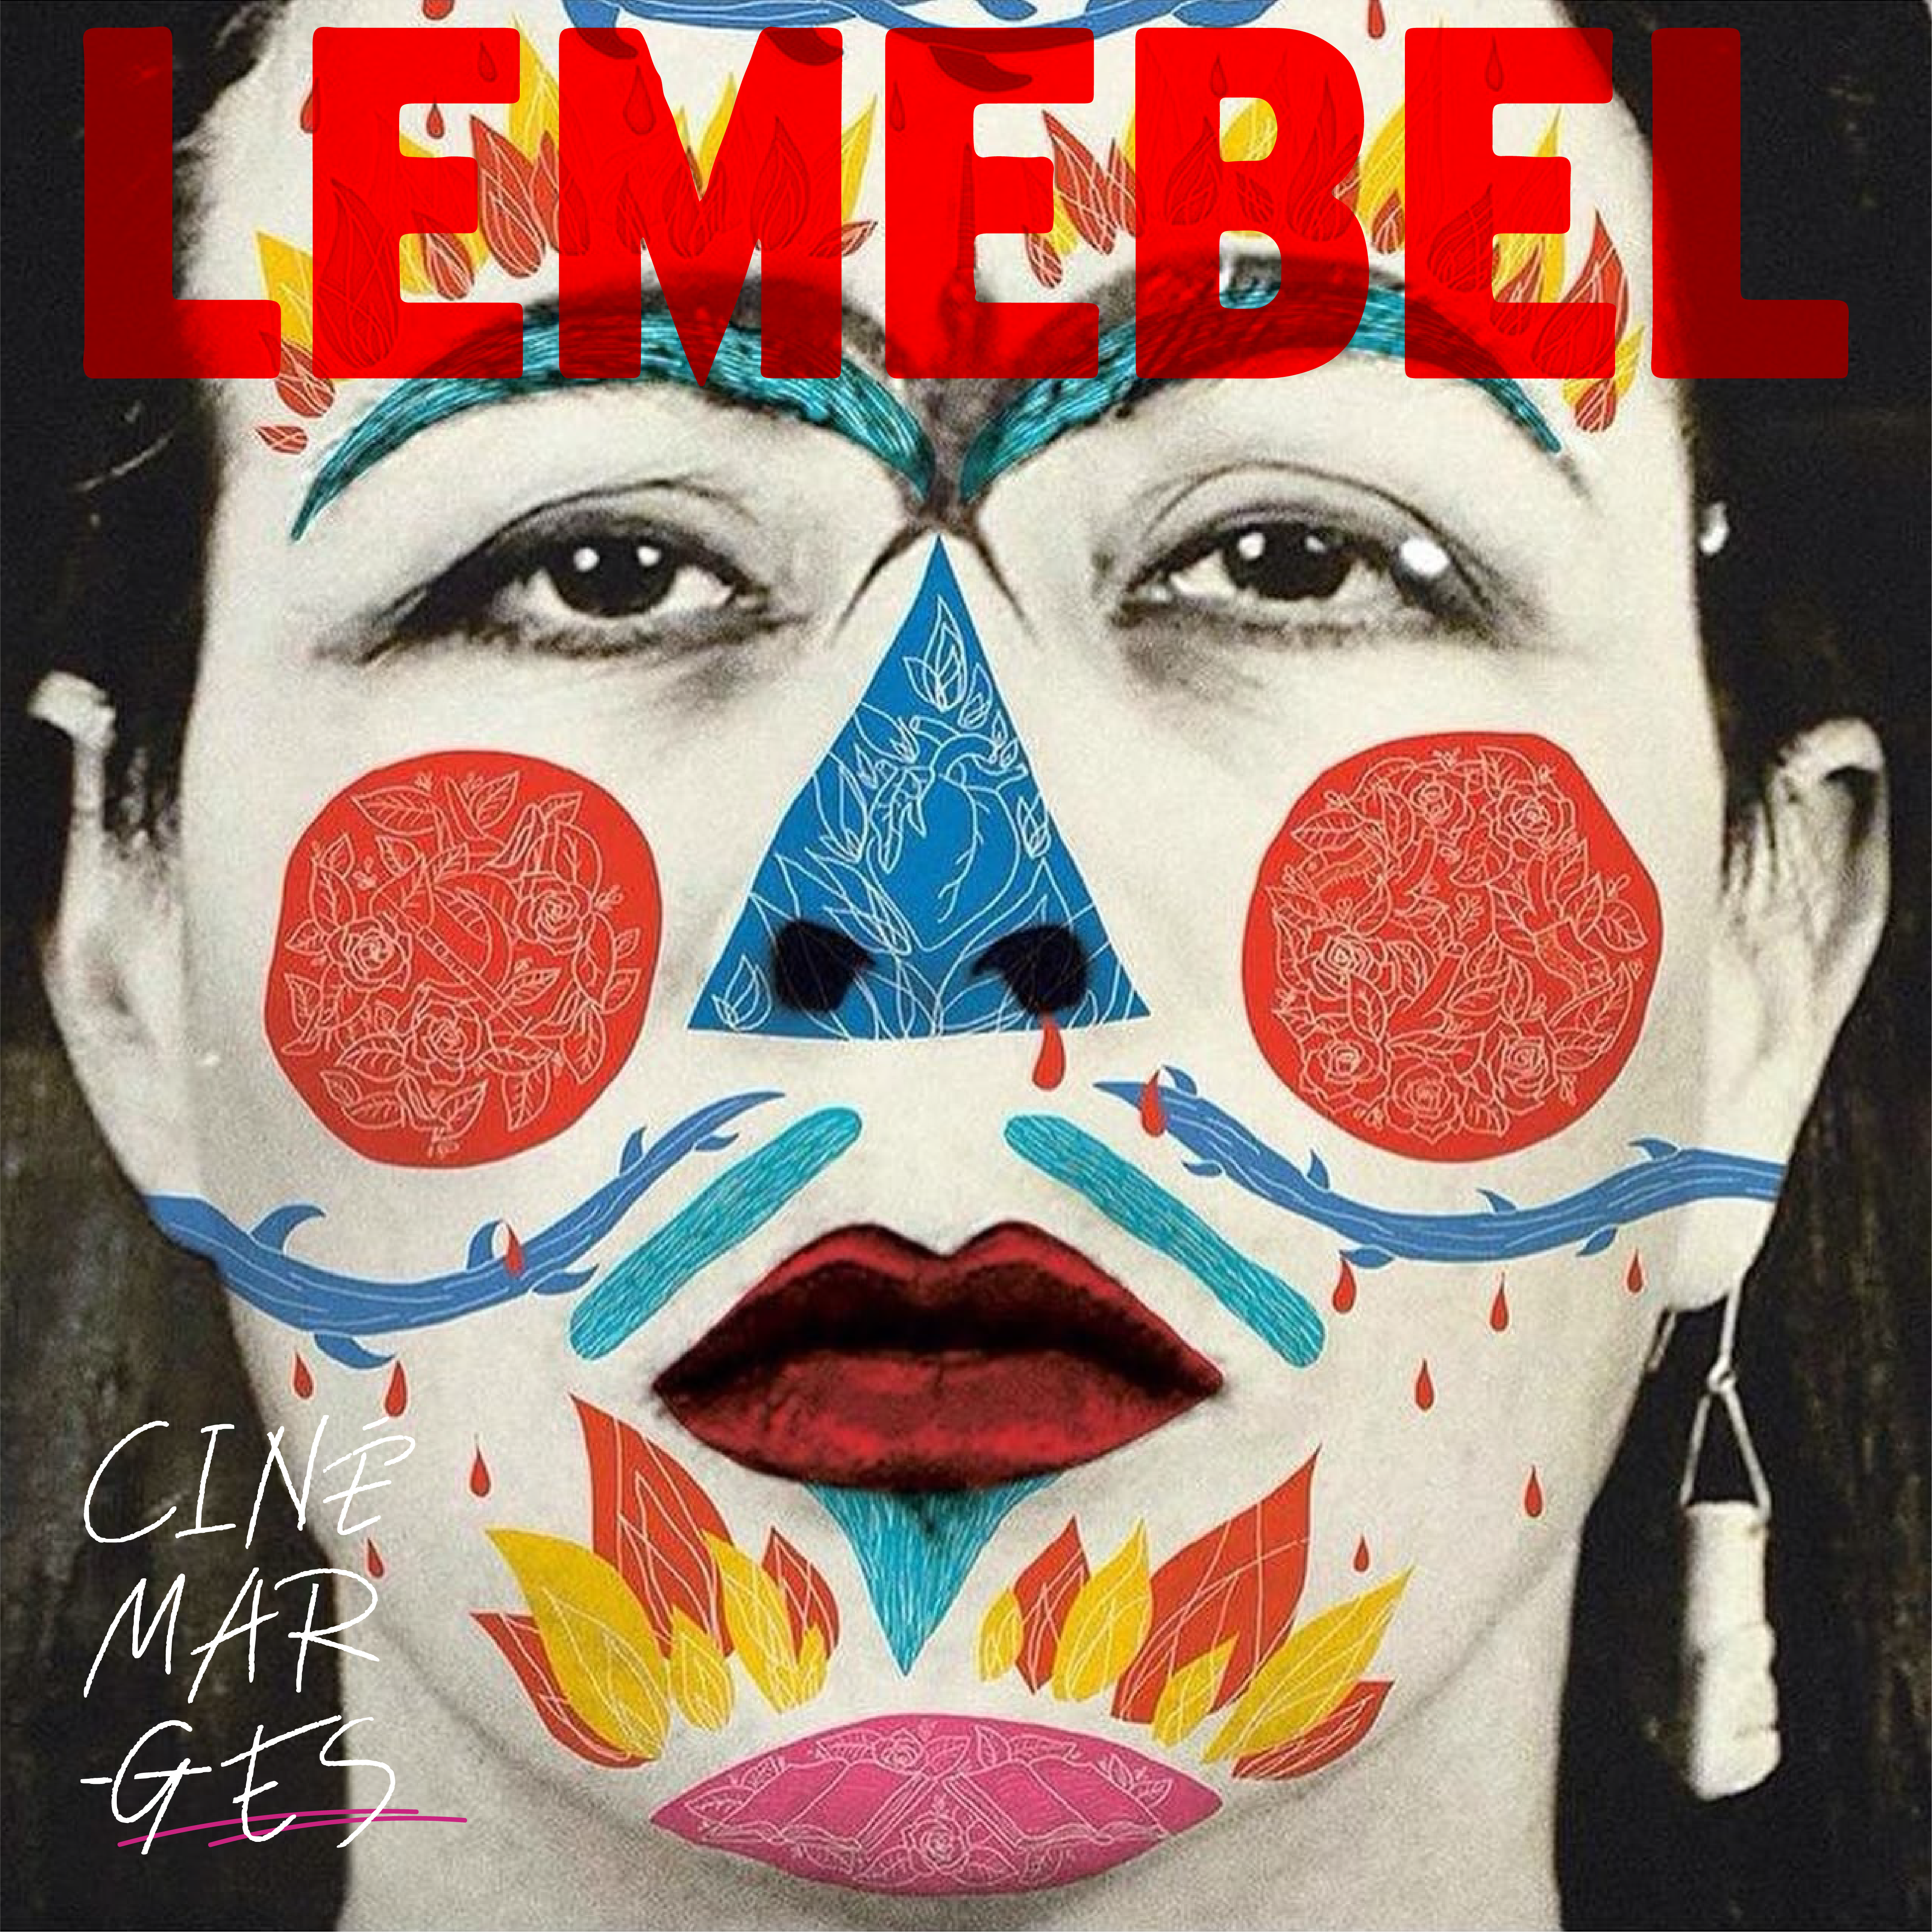 Lemebel-1080×1080-px